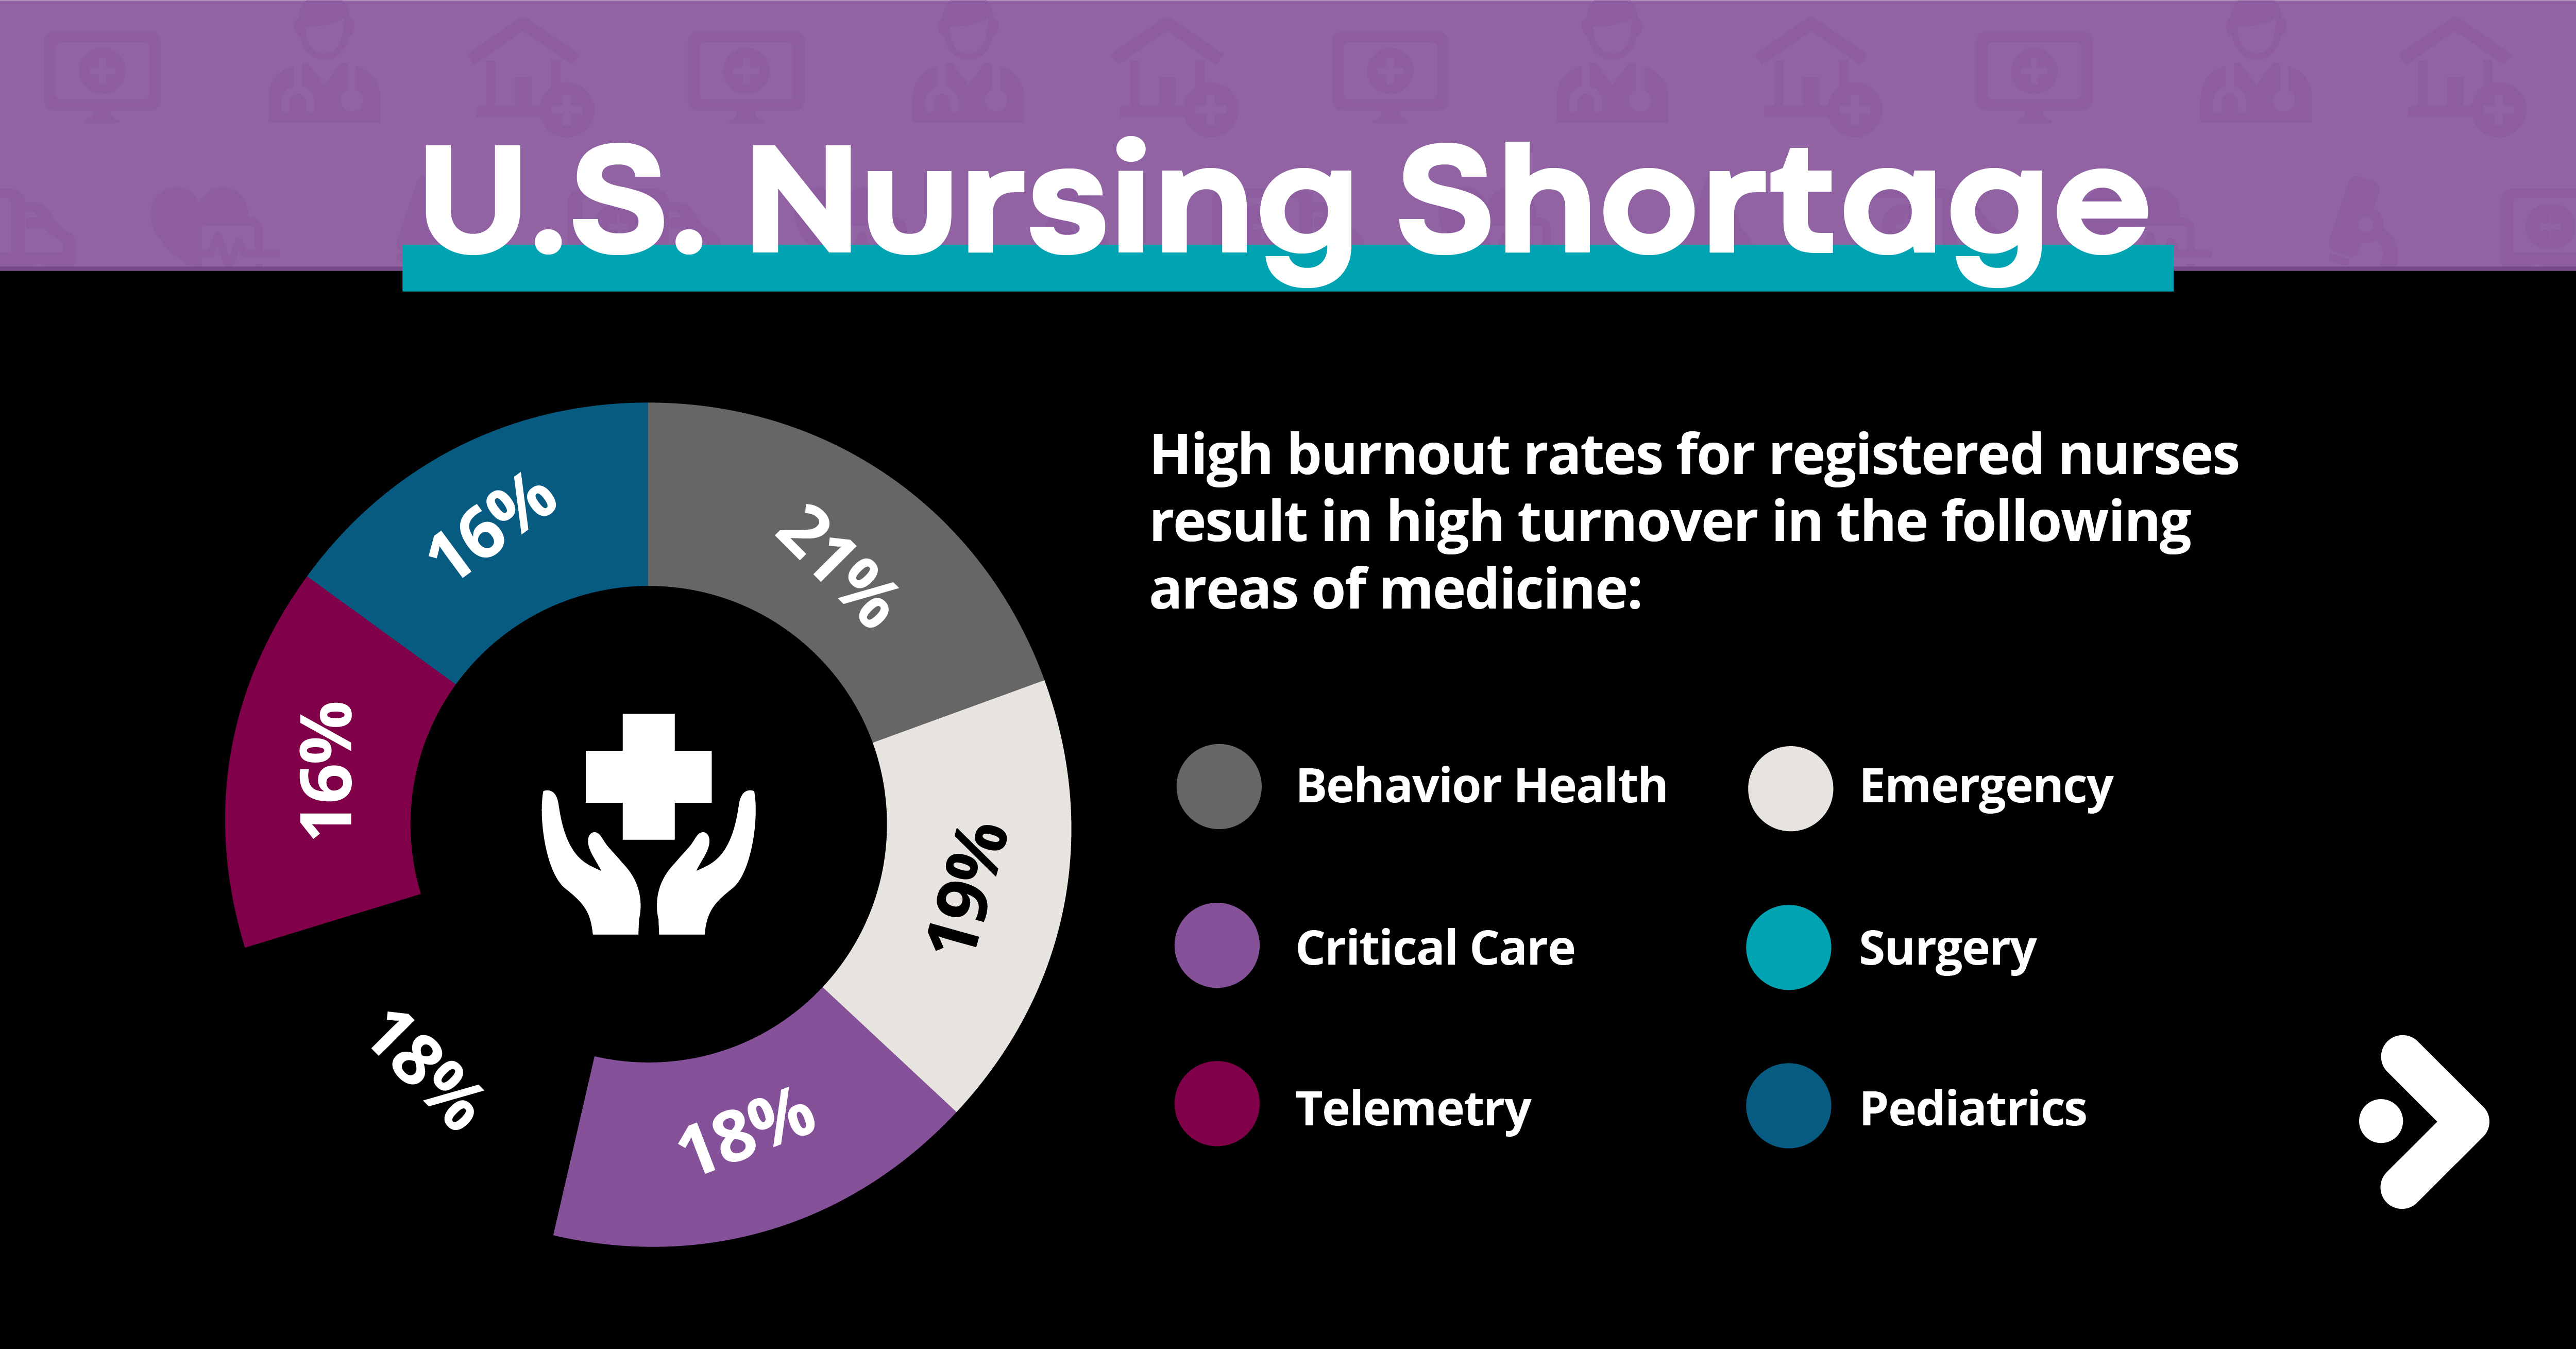 Nursing infographic